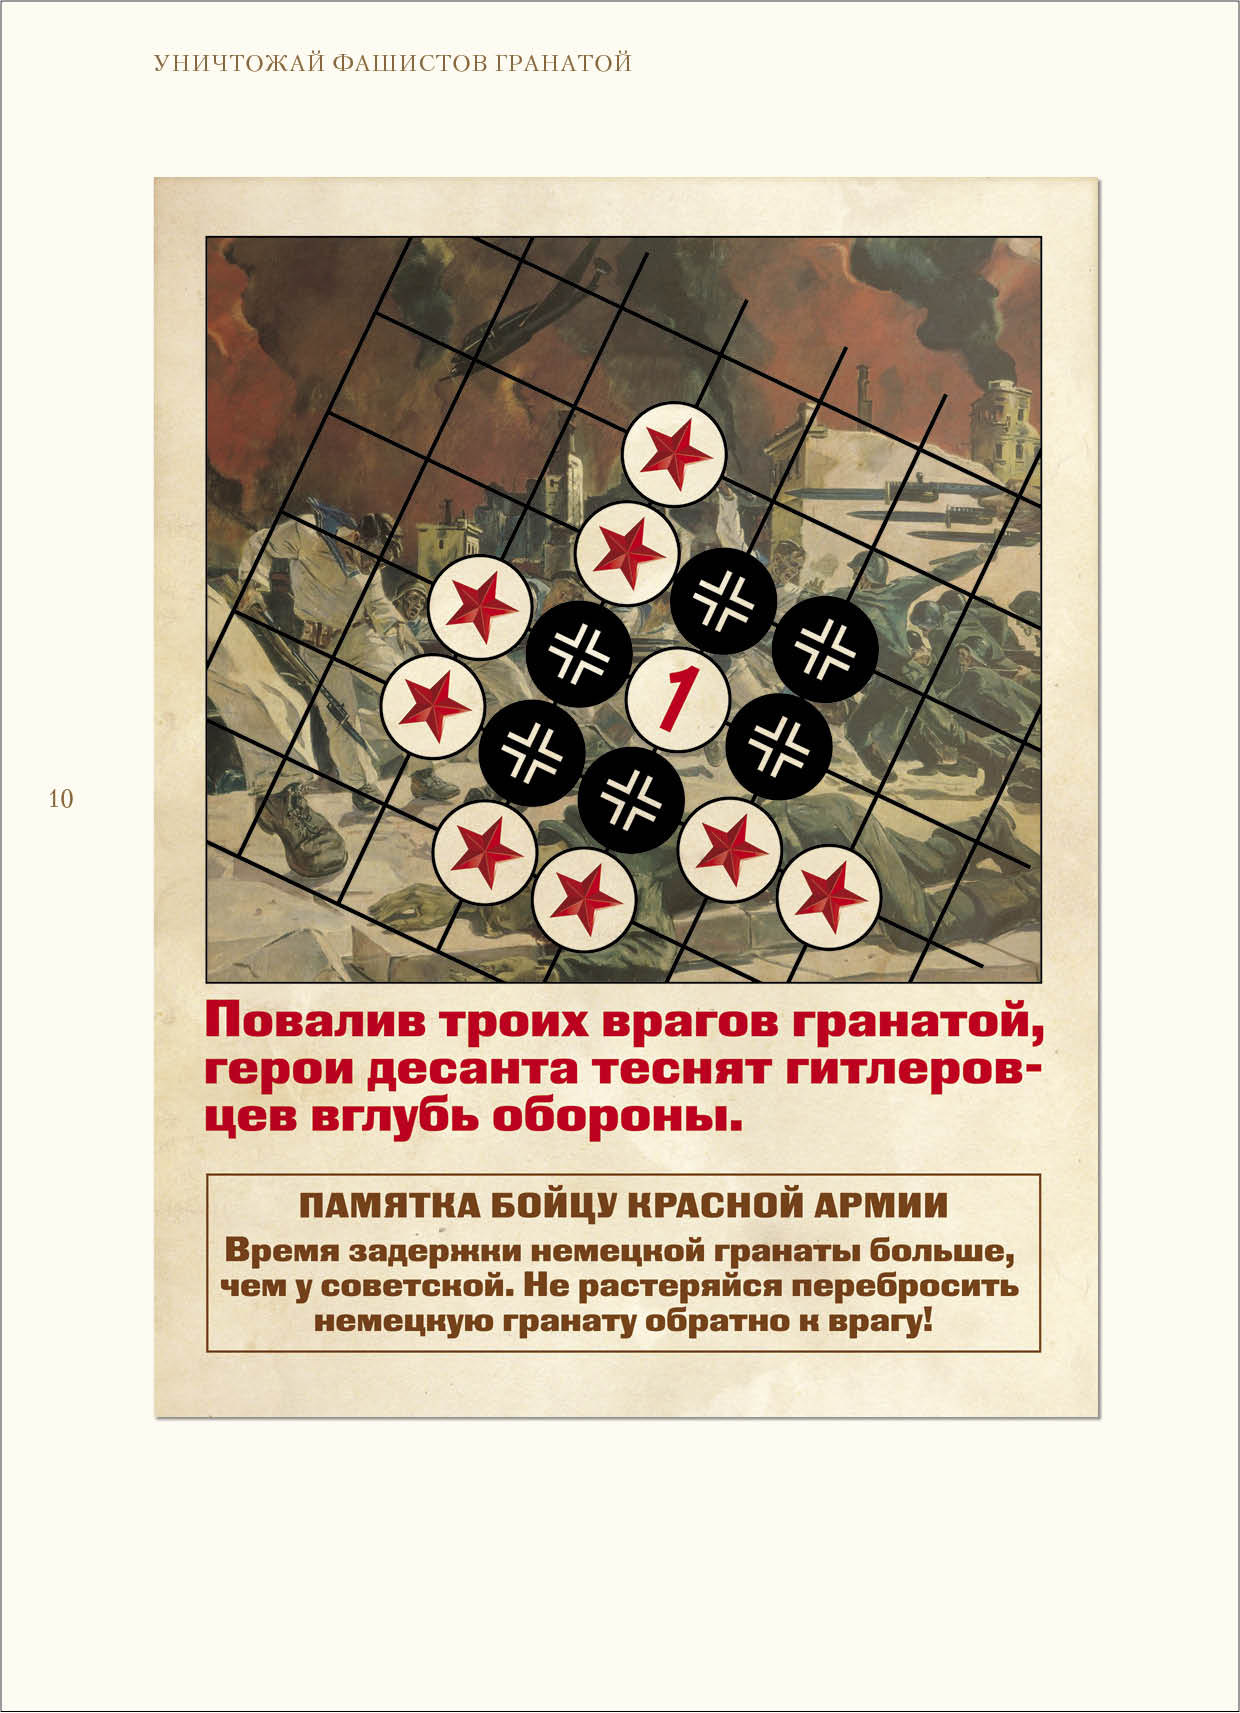 http://weiqi.ru/news/wp-content/uploads/2013/05/granata2.jpg 